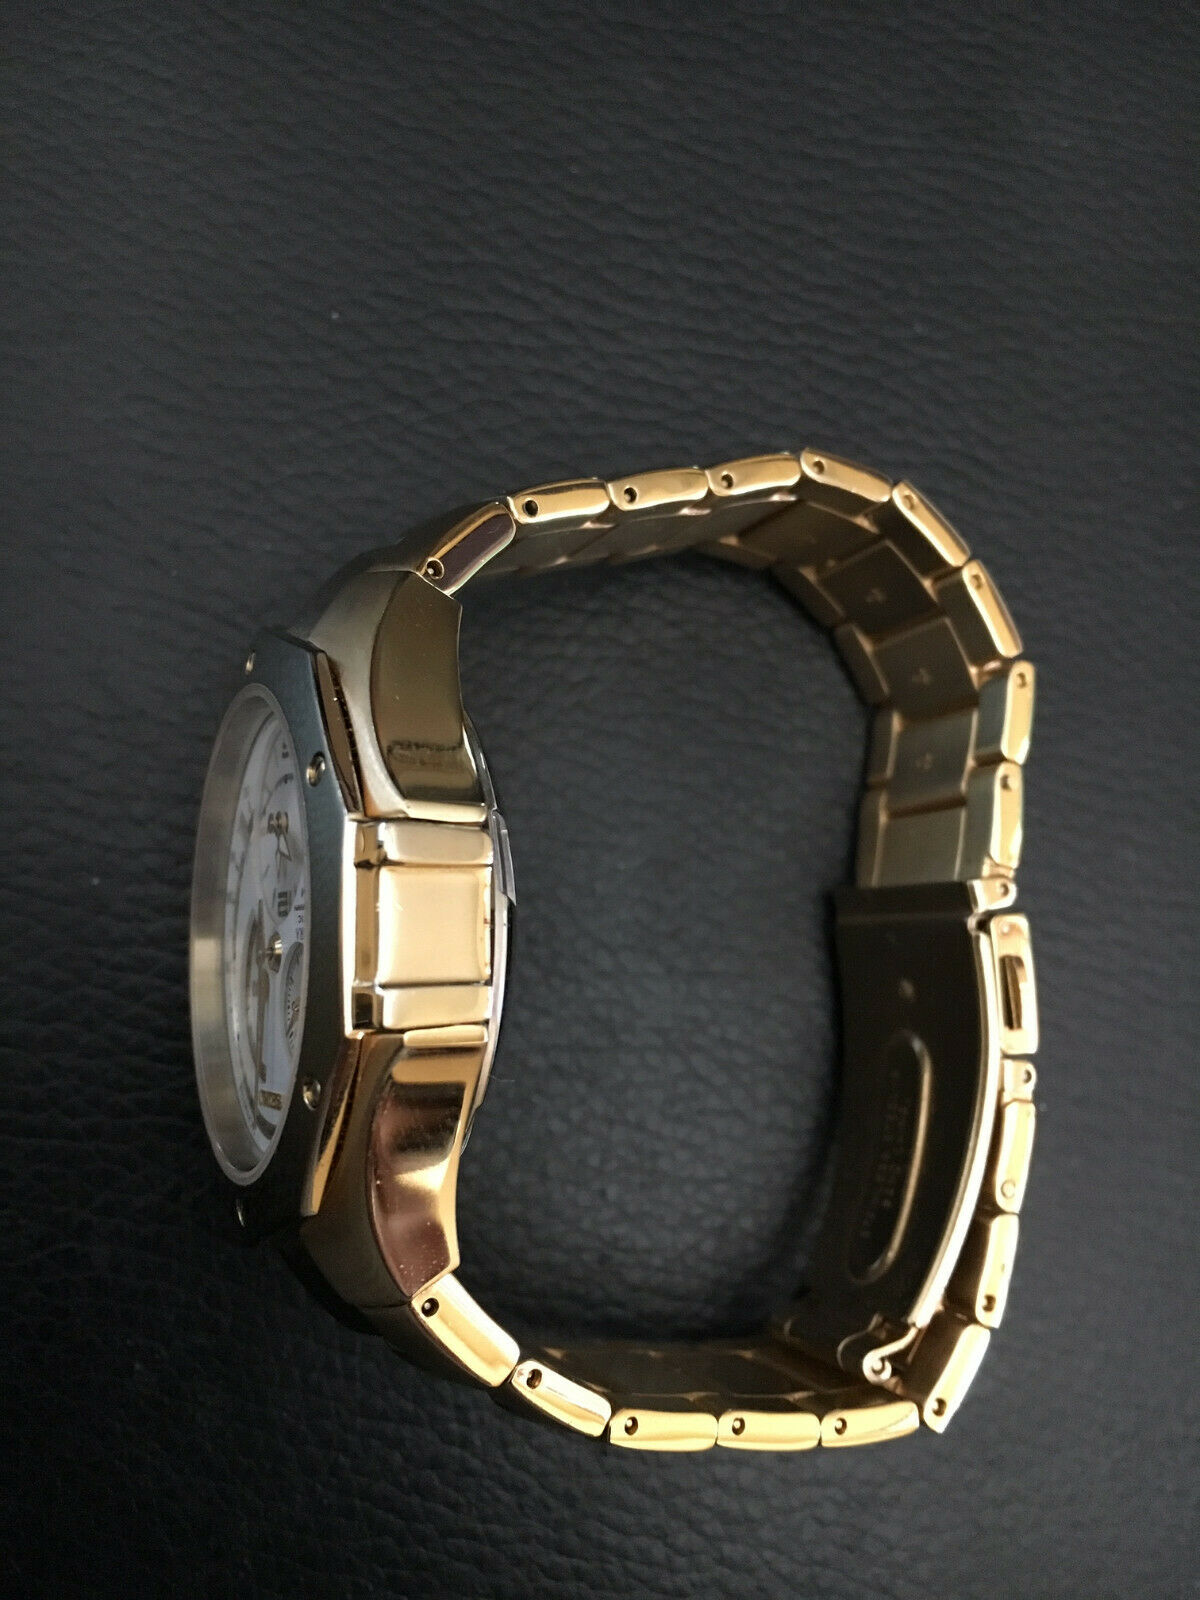 Gold tone Seiko Coutura Kinetic Chronograph 100m, 7L22-0AL0 mens watch |  WatchCharts